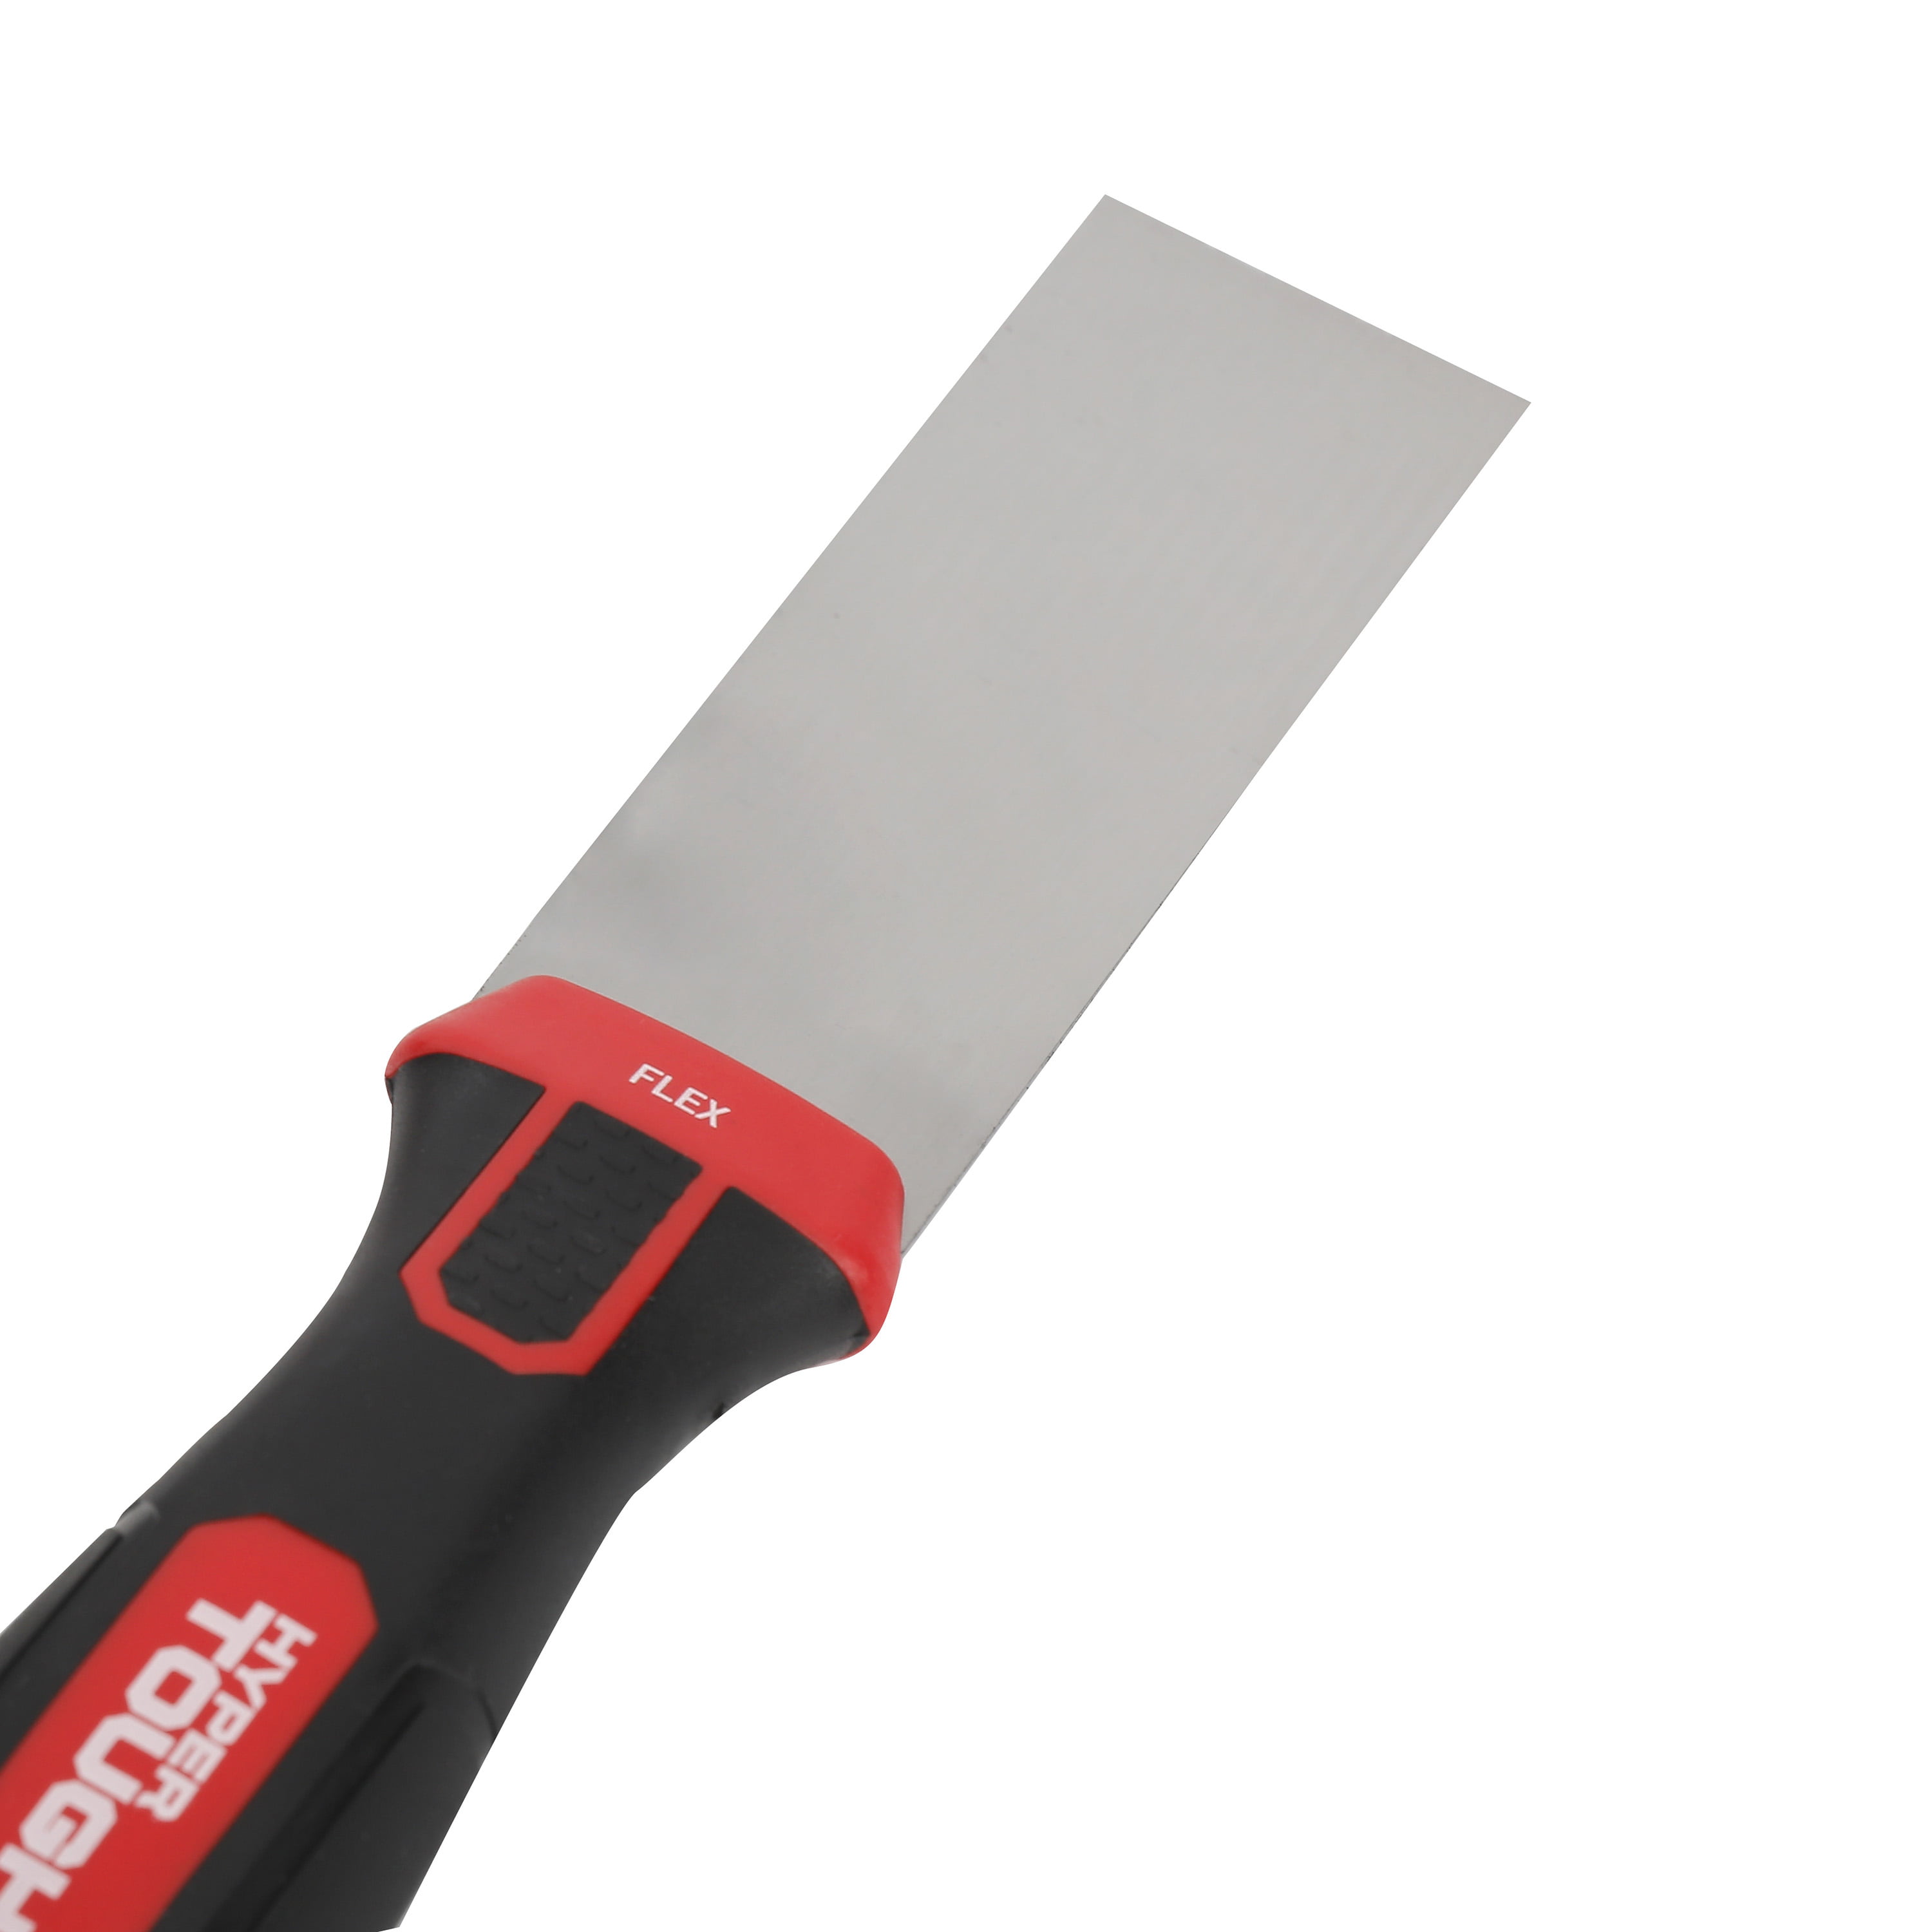 Hi-Craft® 2 Flex Putty Knife with Soft Grip Handle